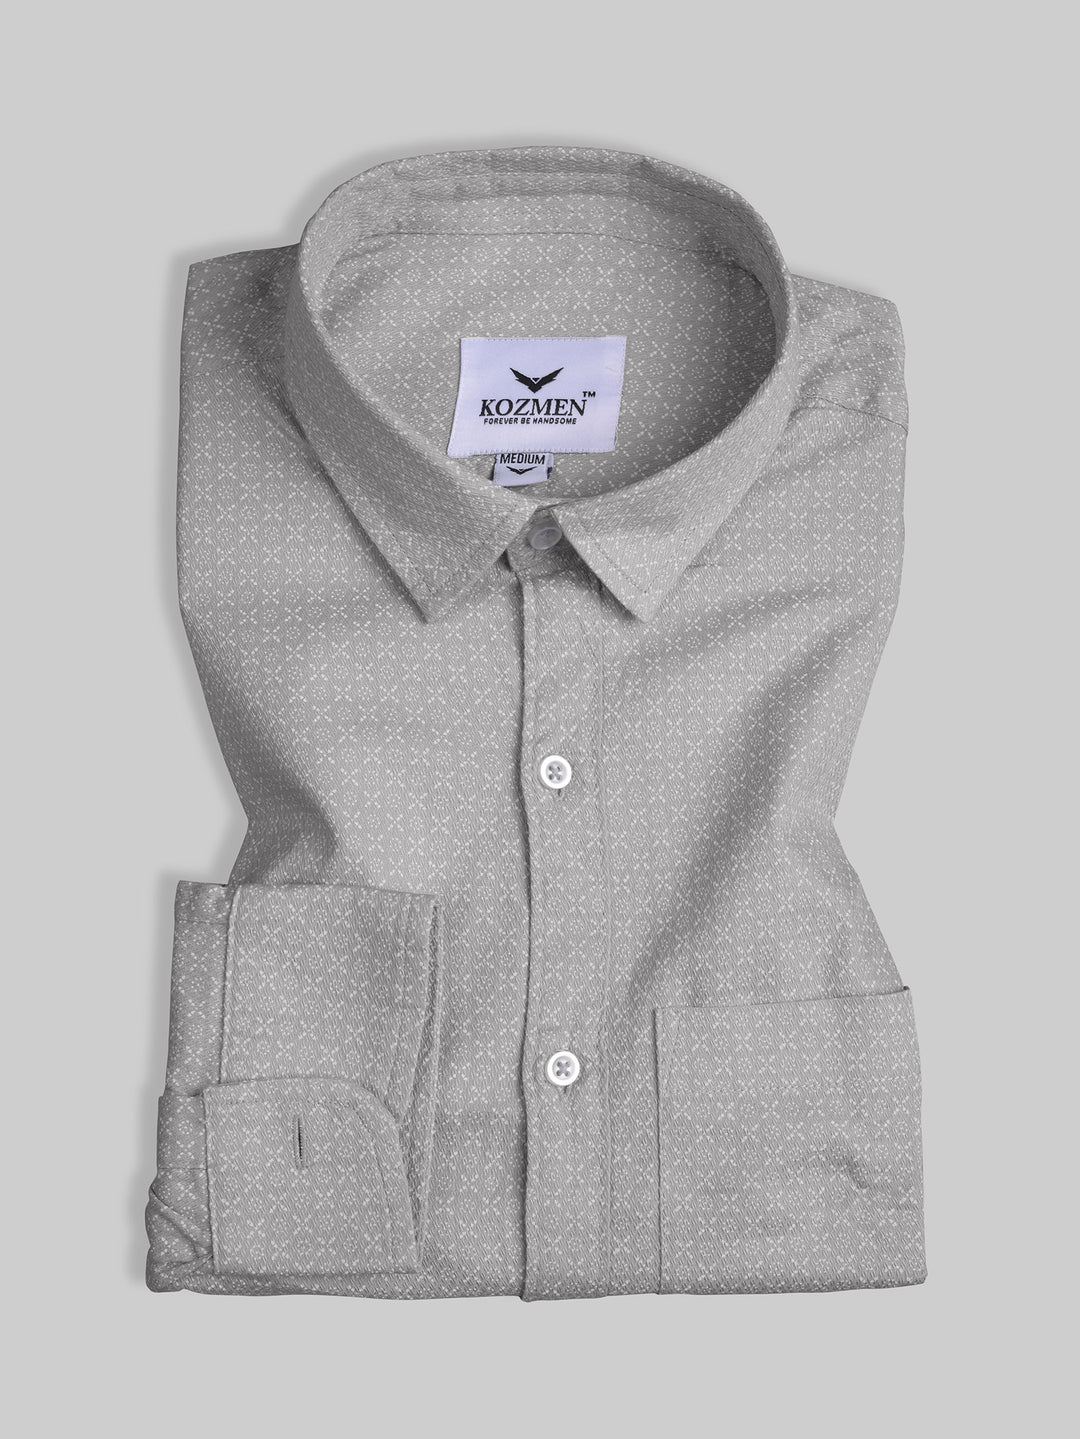 Rhino Grey with White Micro Dot Print Cotton Shirt